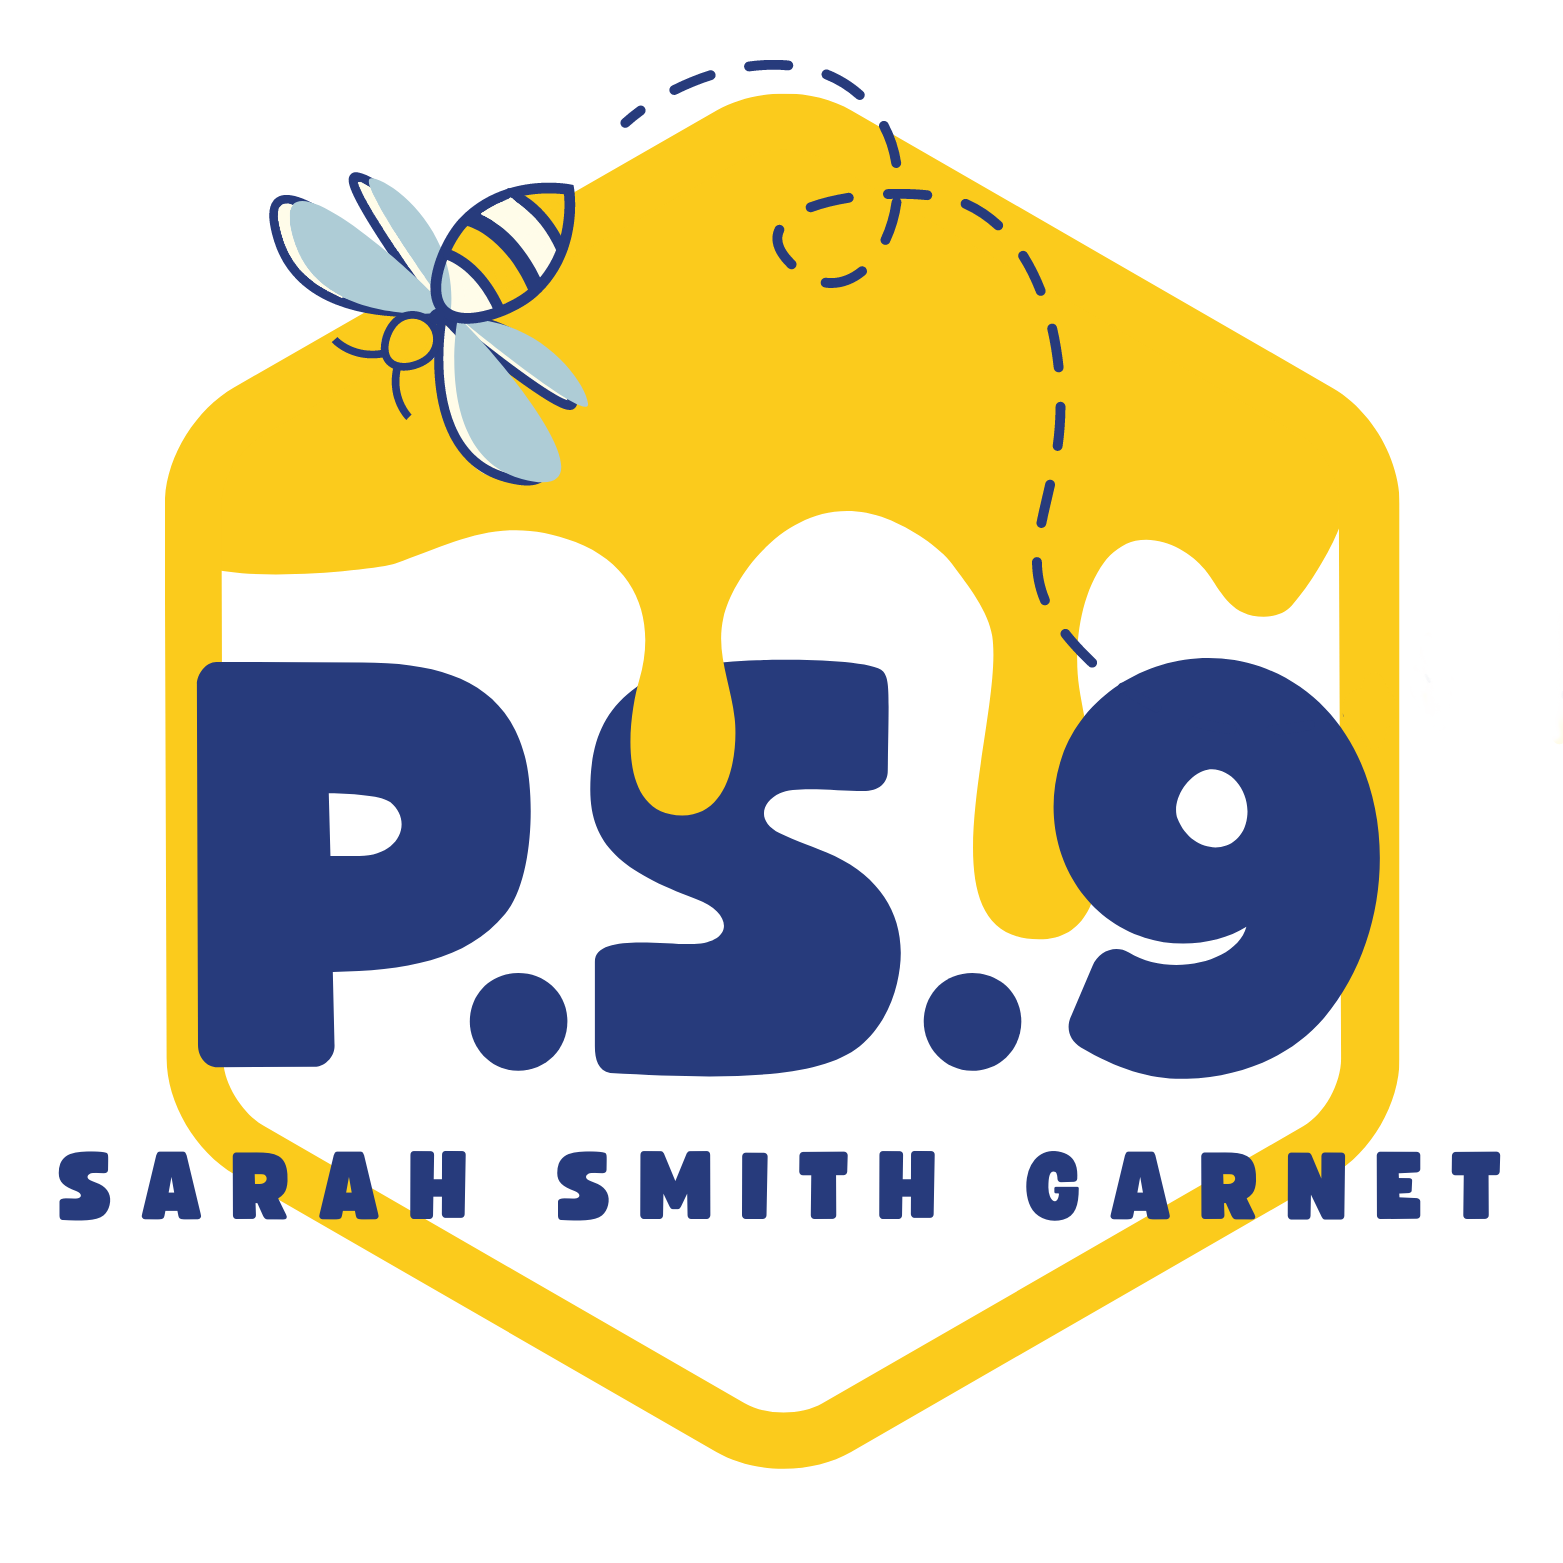 PS 9 Logo - Transparent Background.png